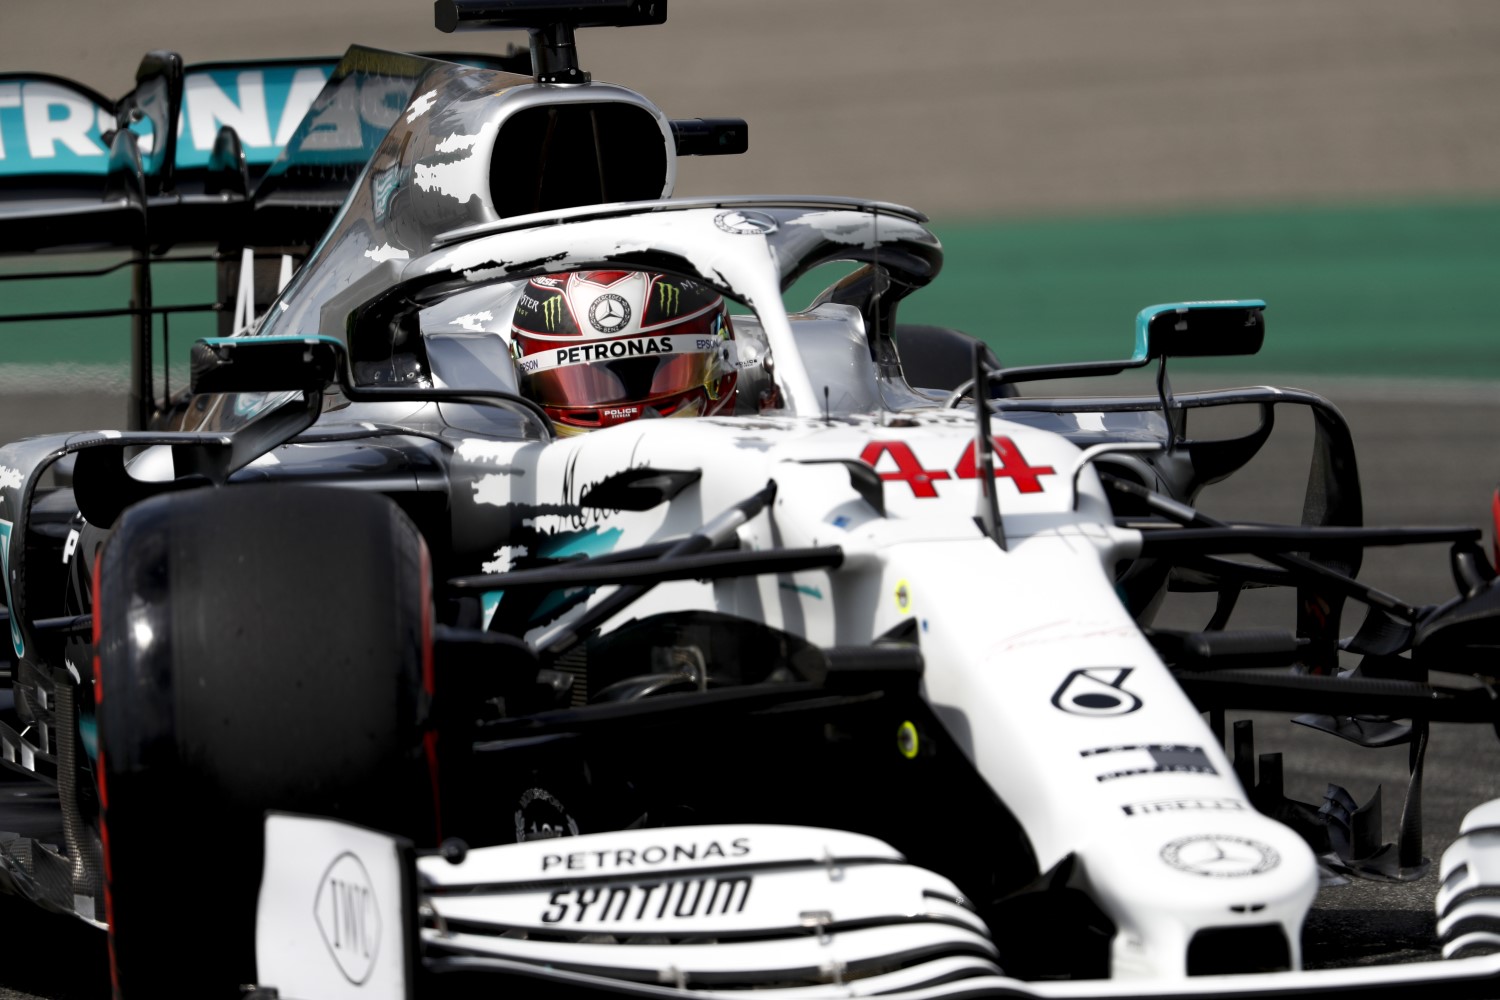 Lewis Hamilton poised to win the German GP